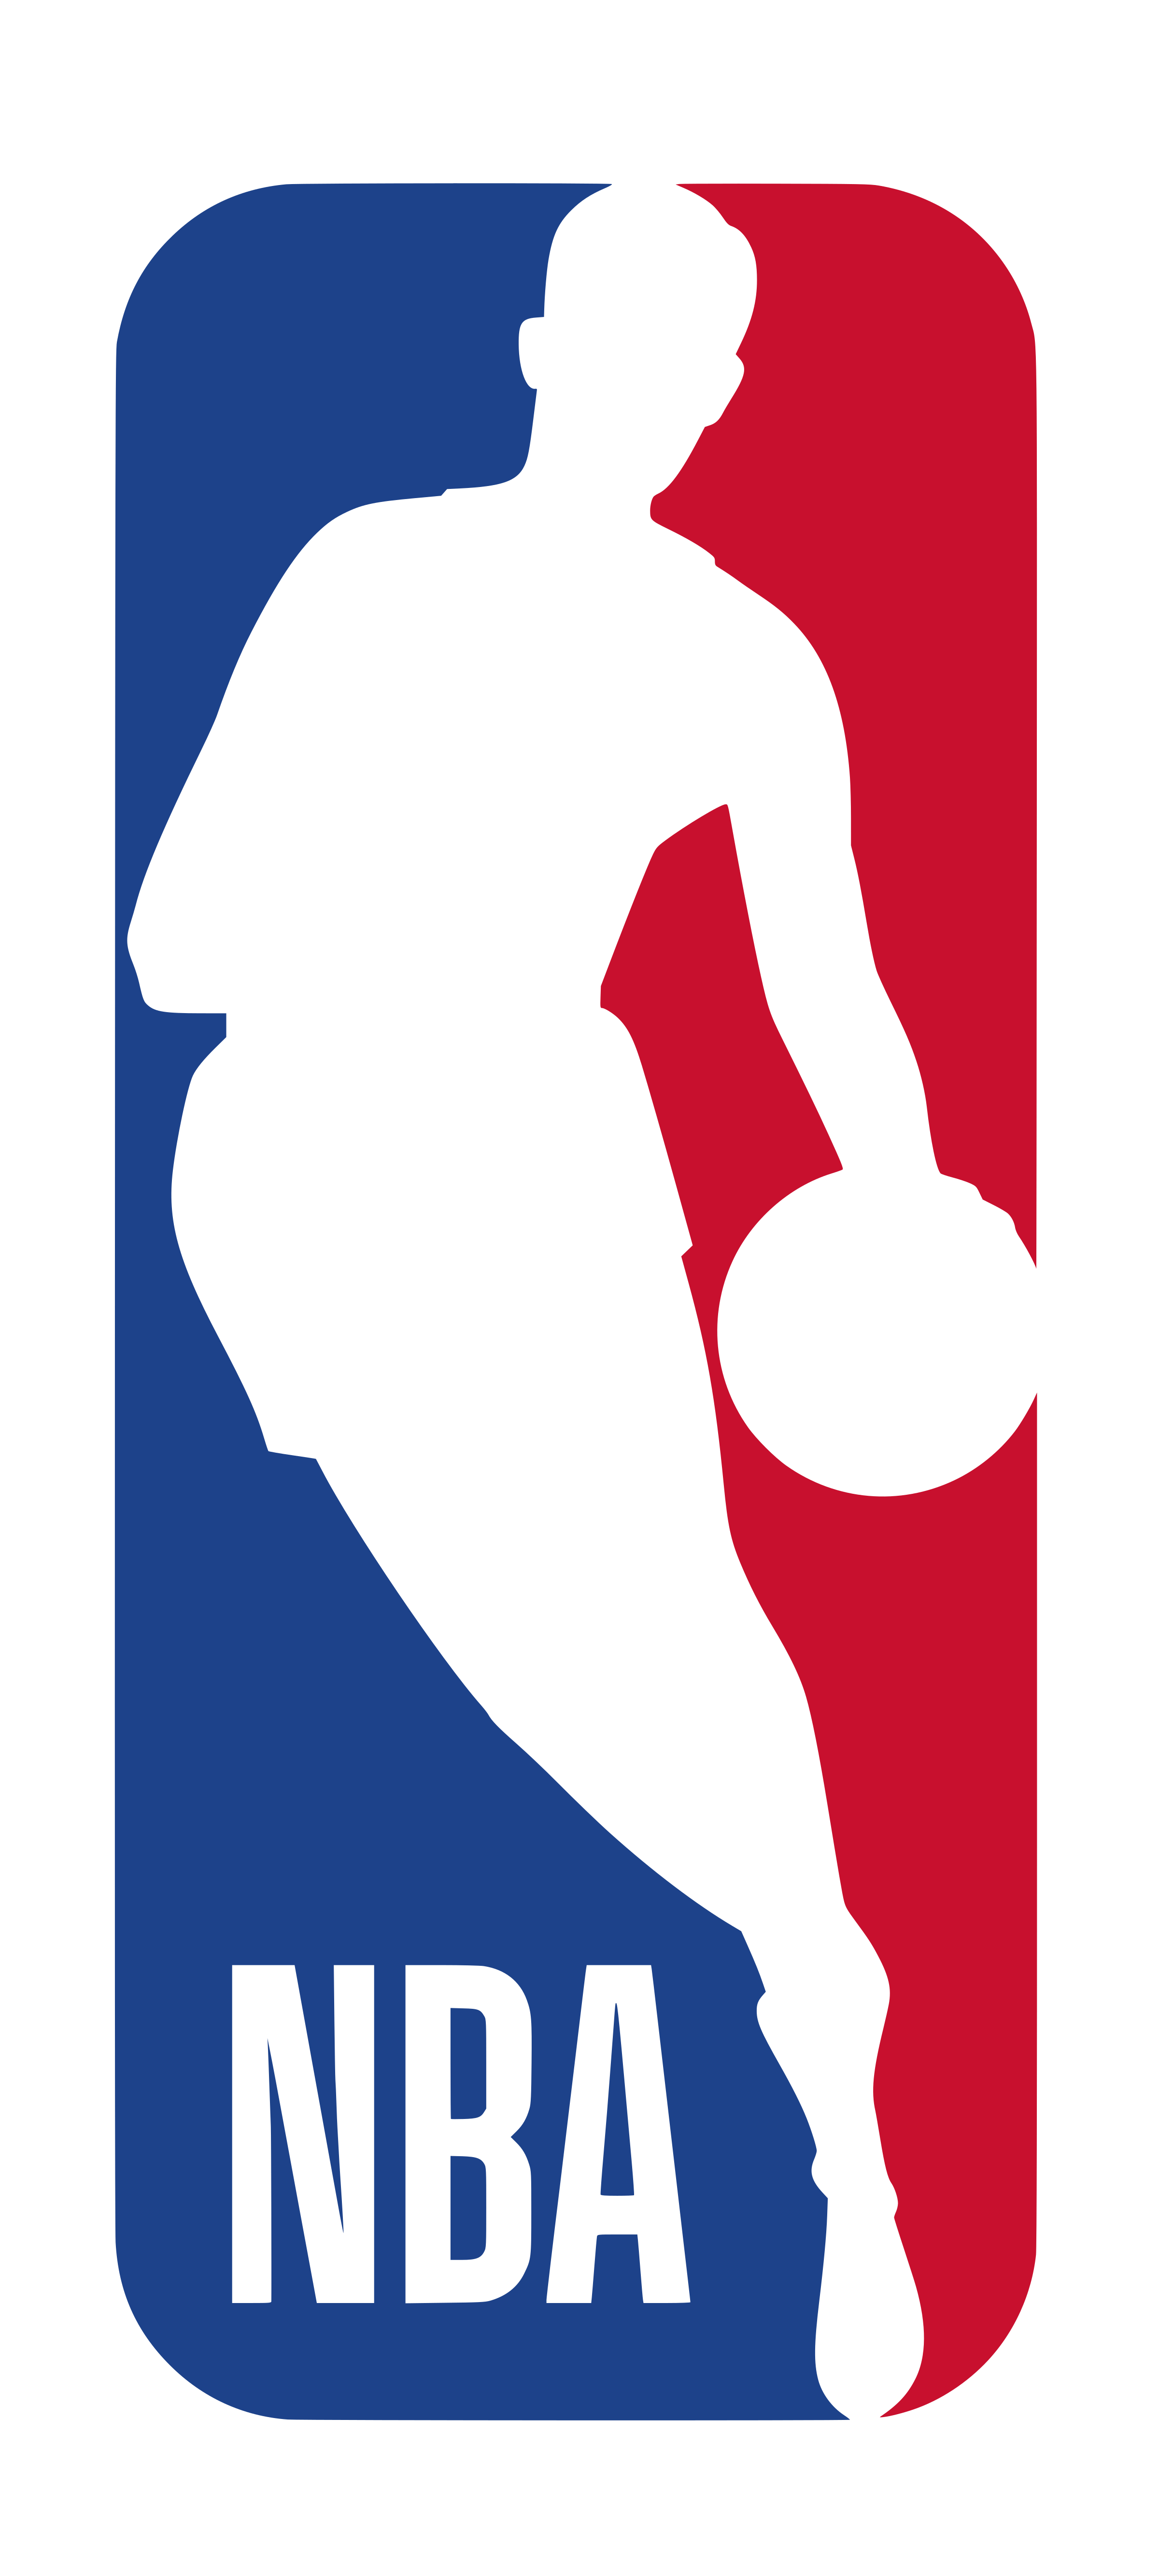 Logo NBA PNG Images HD